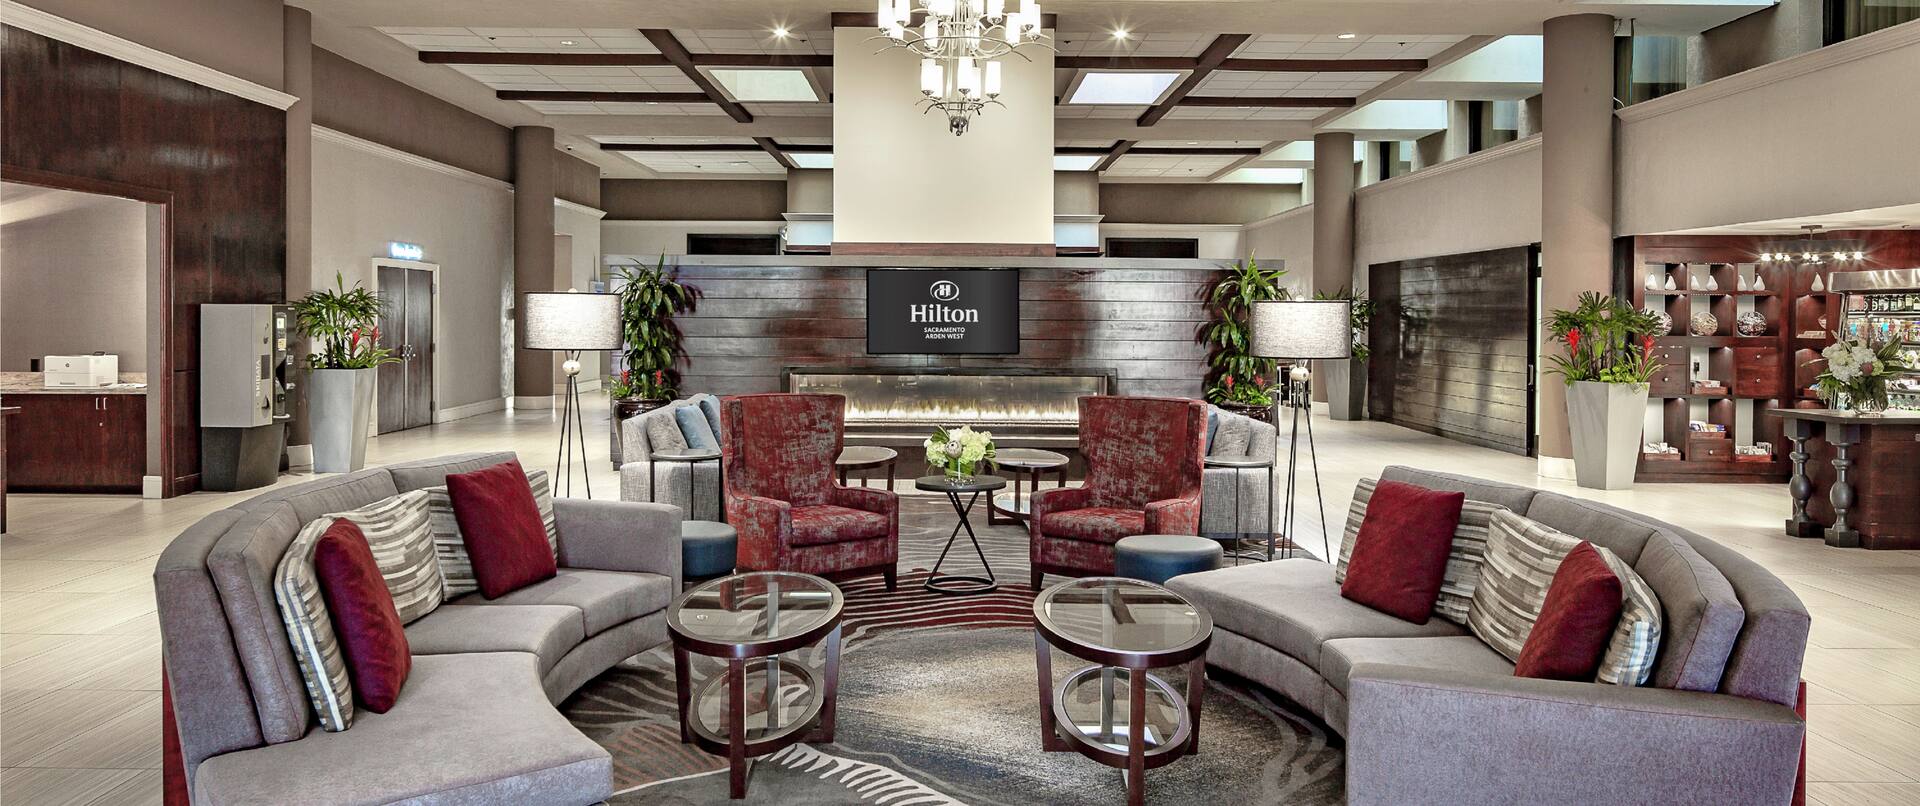 Hilton  Sacramento Hotel Lobby